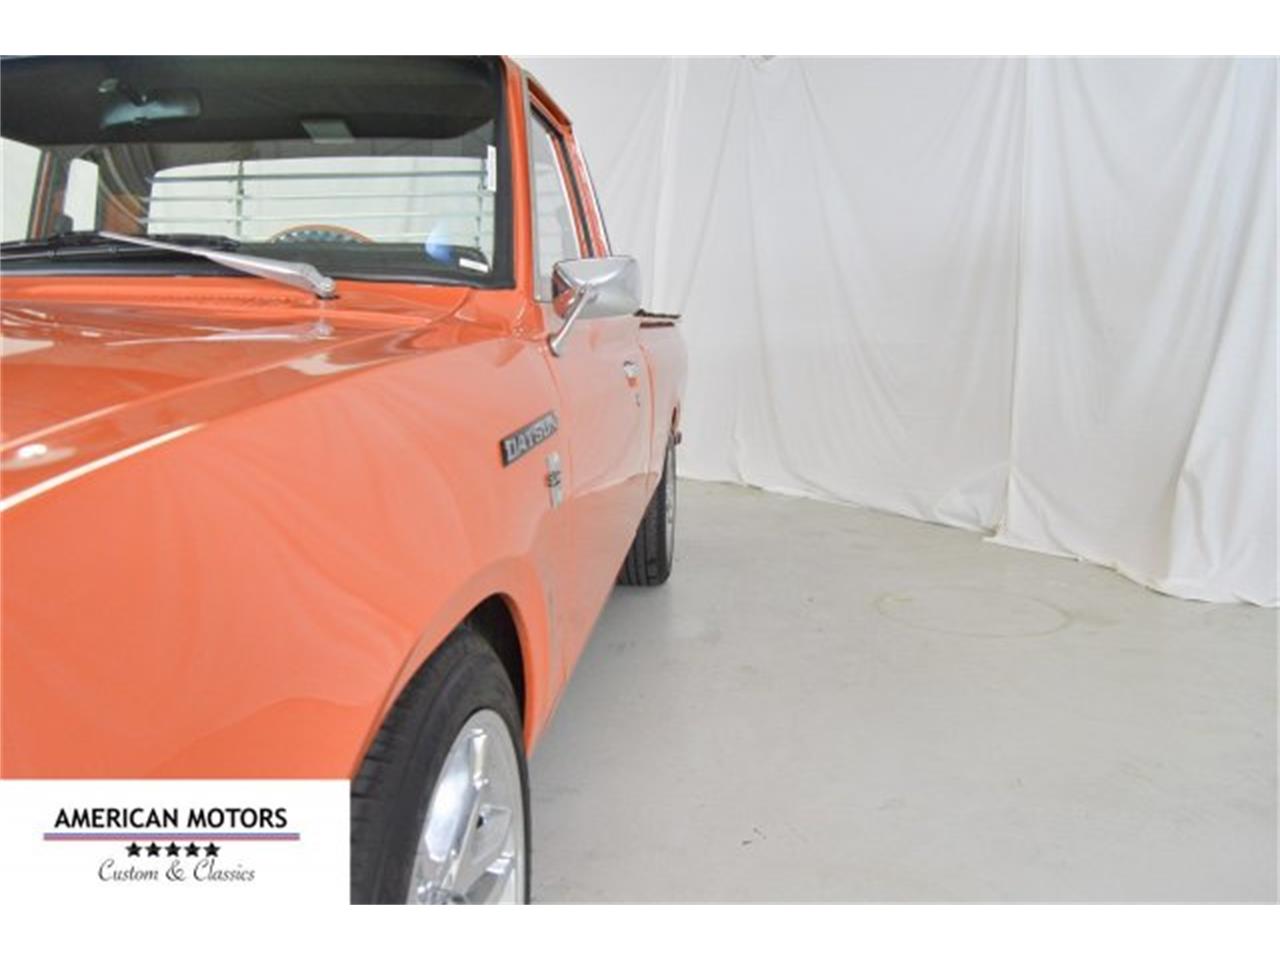 1978 Datsun Pickup for Sale ClassicCars com CC 924746